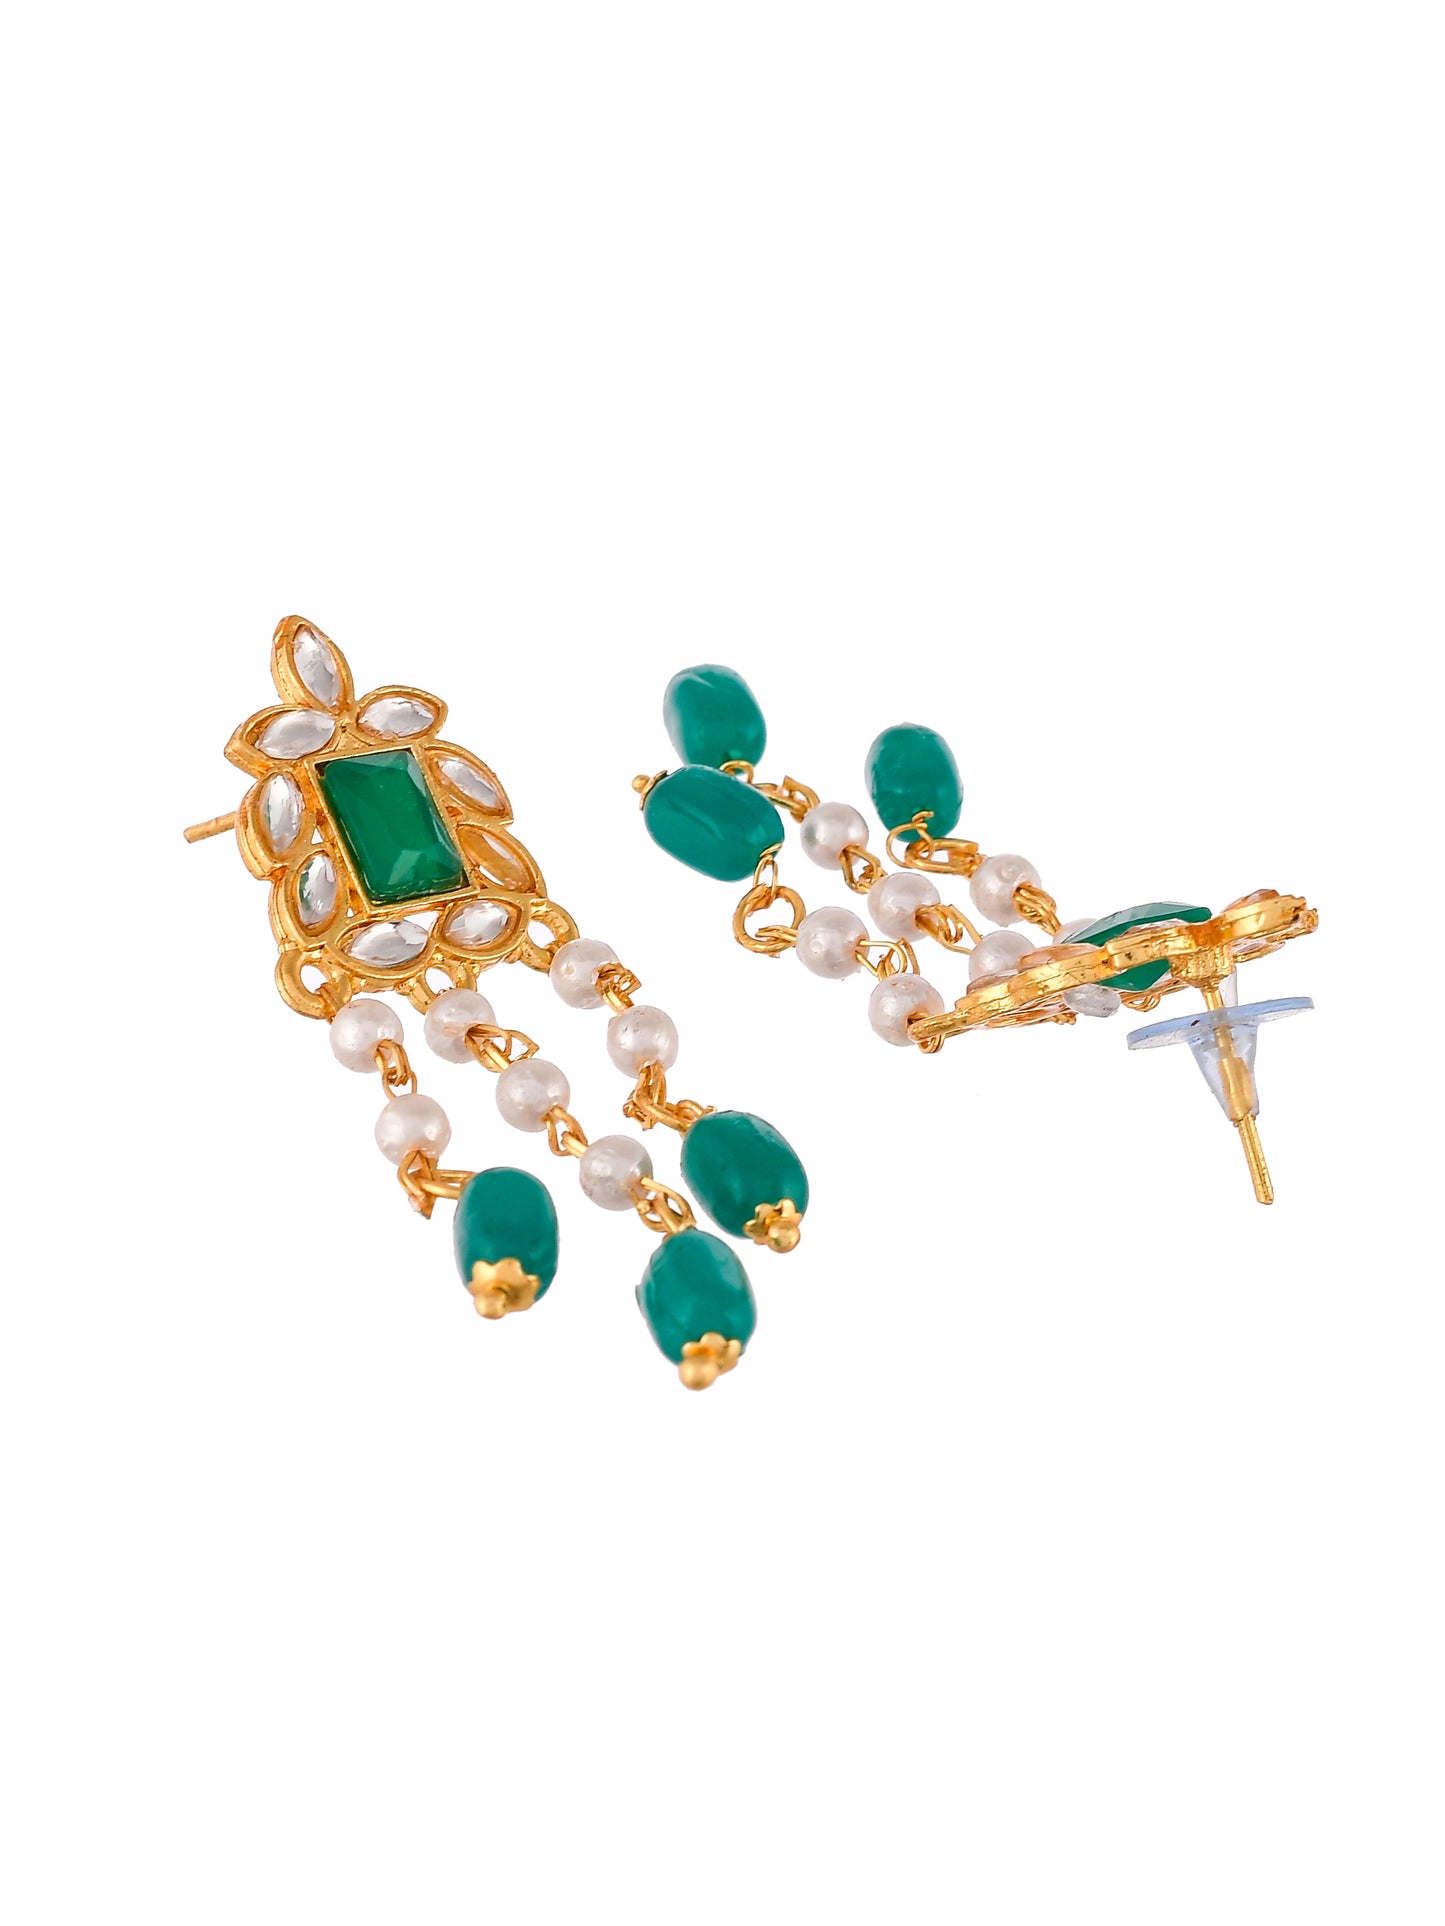 Diya Green Beads Choker Necklace Set